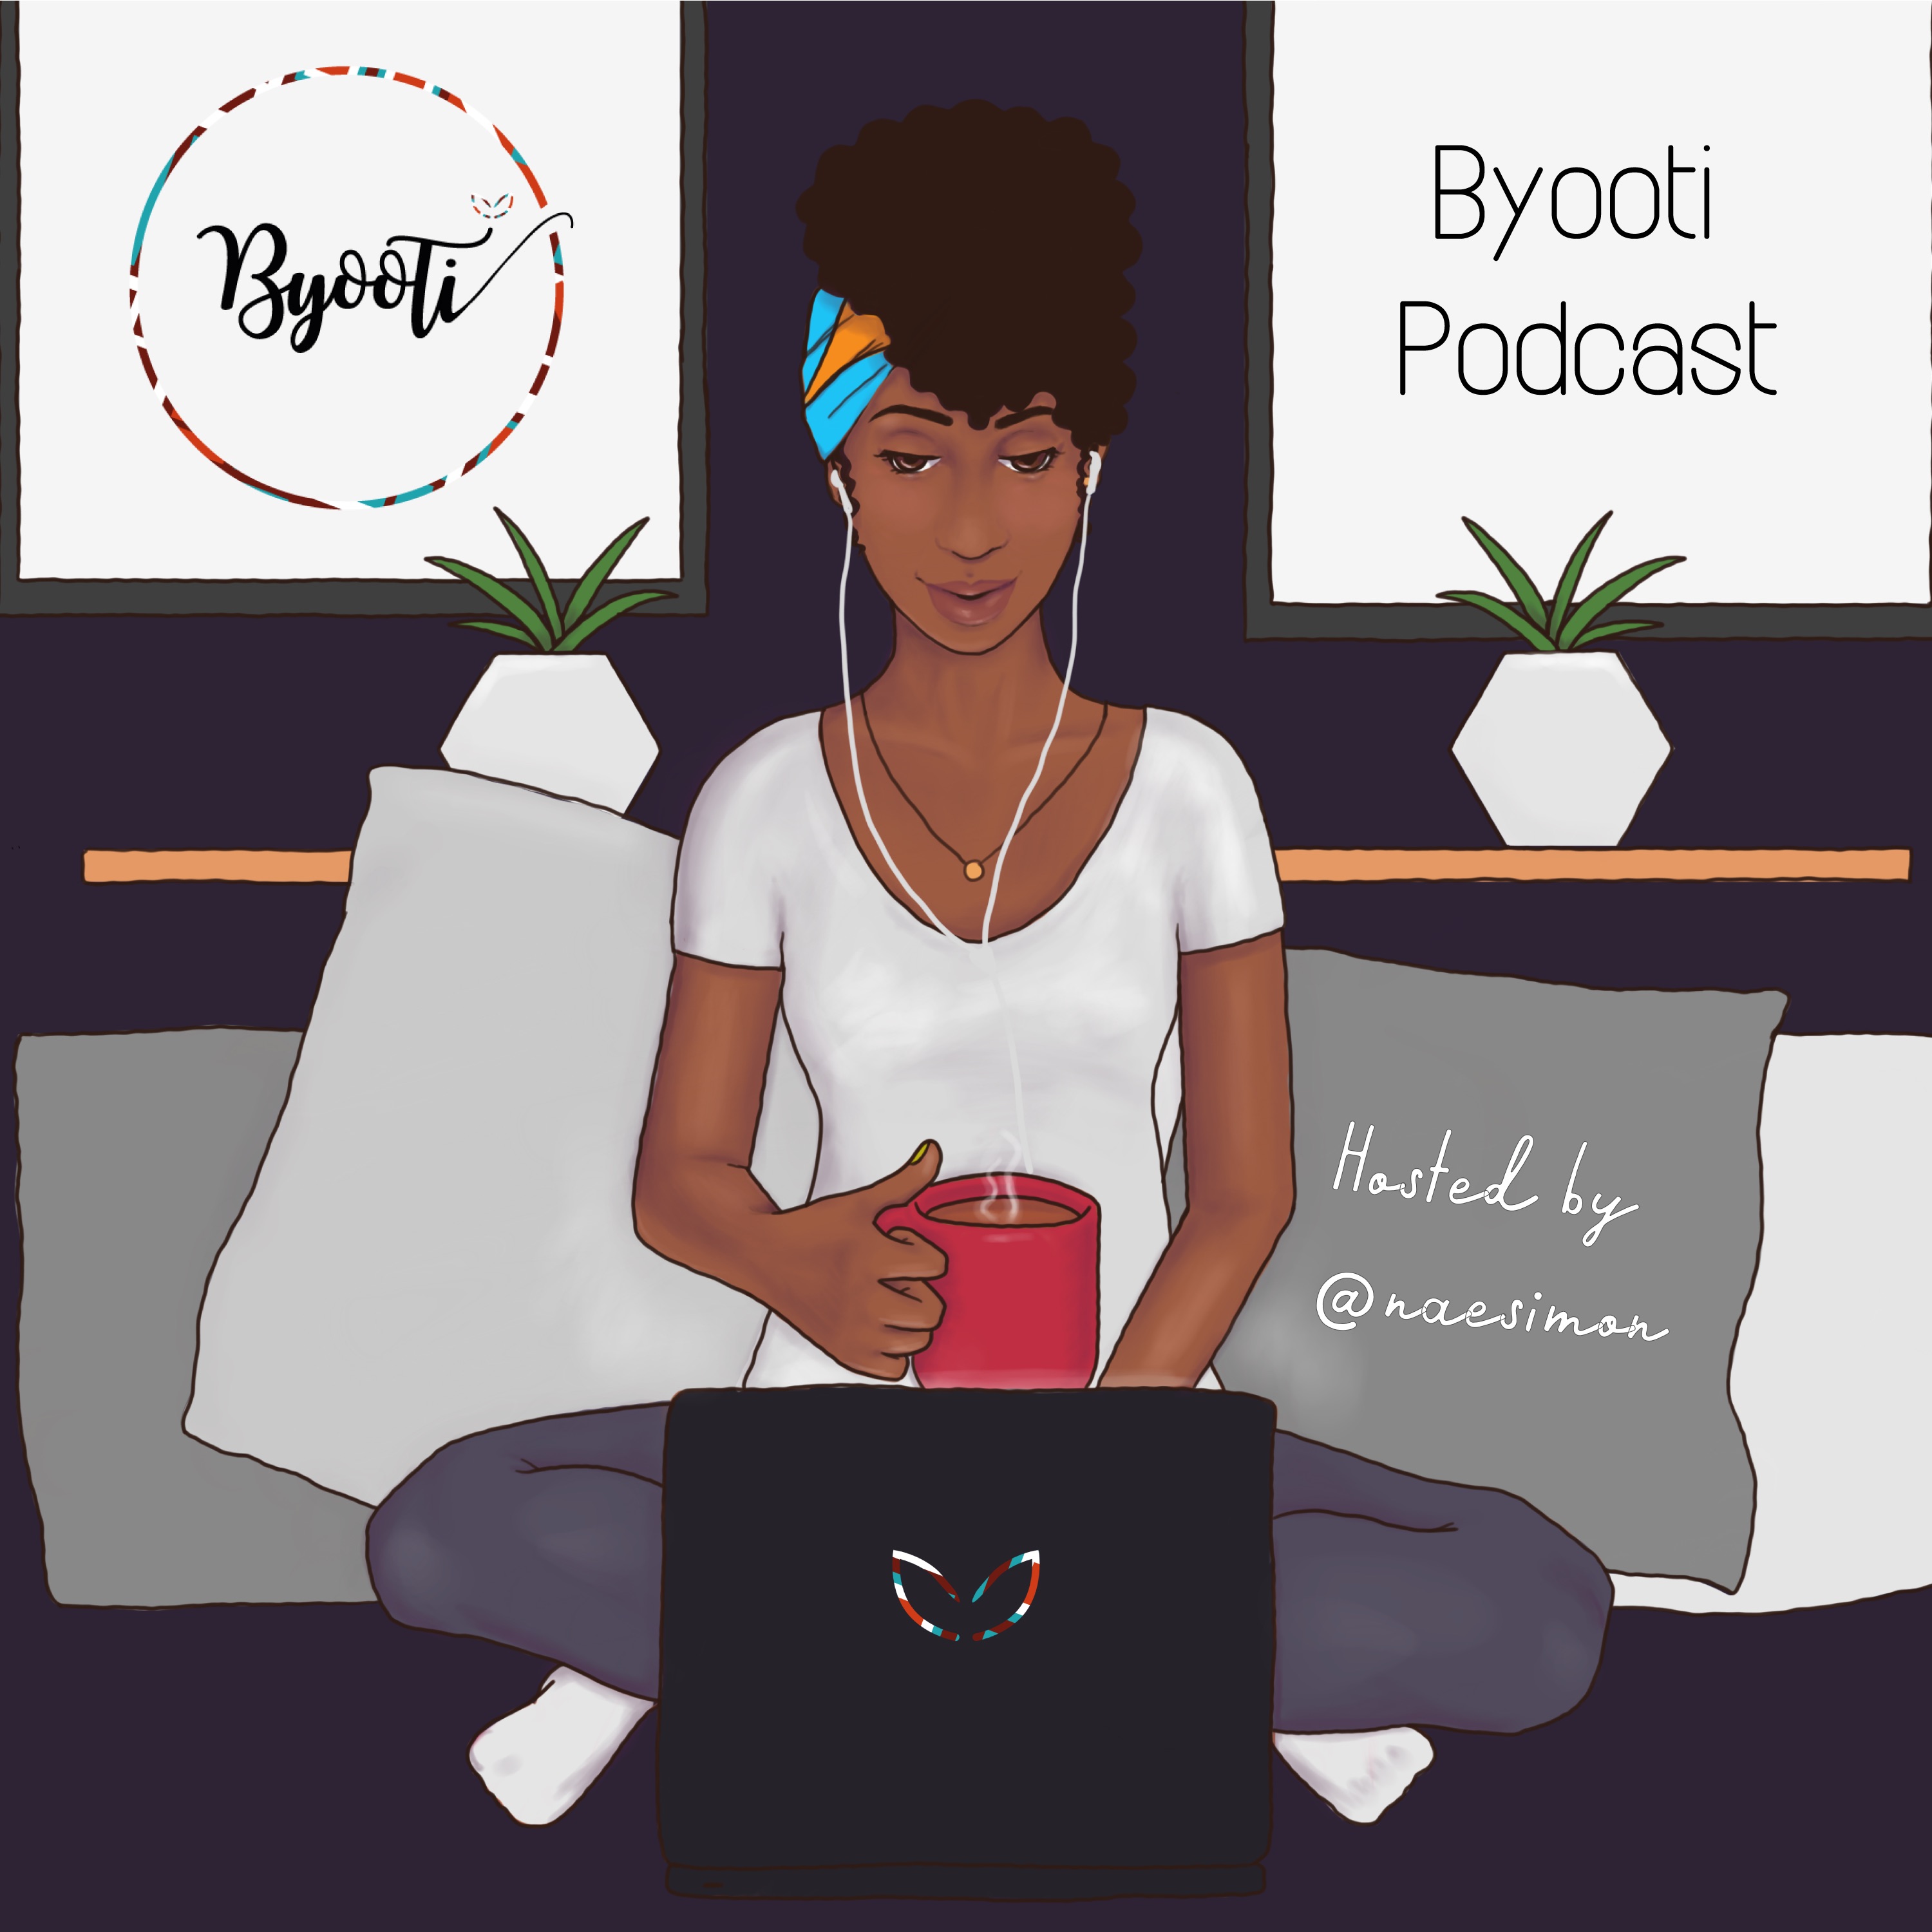 Byooti Podcast